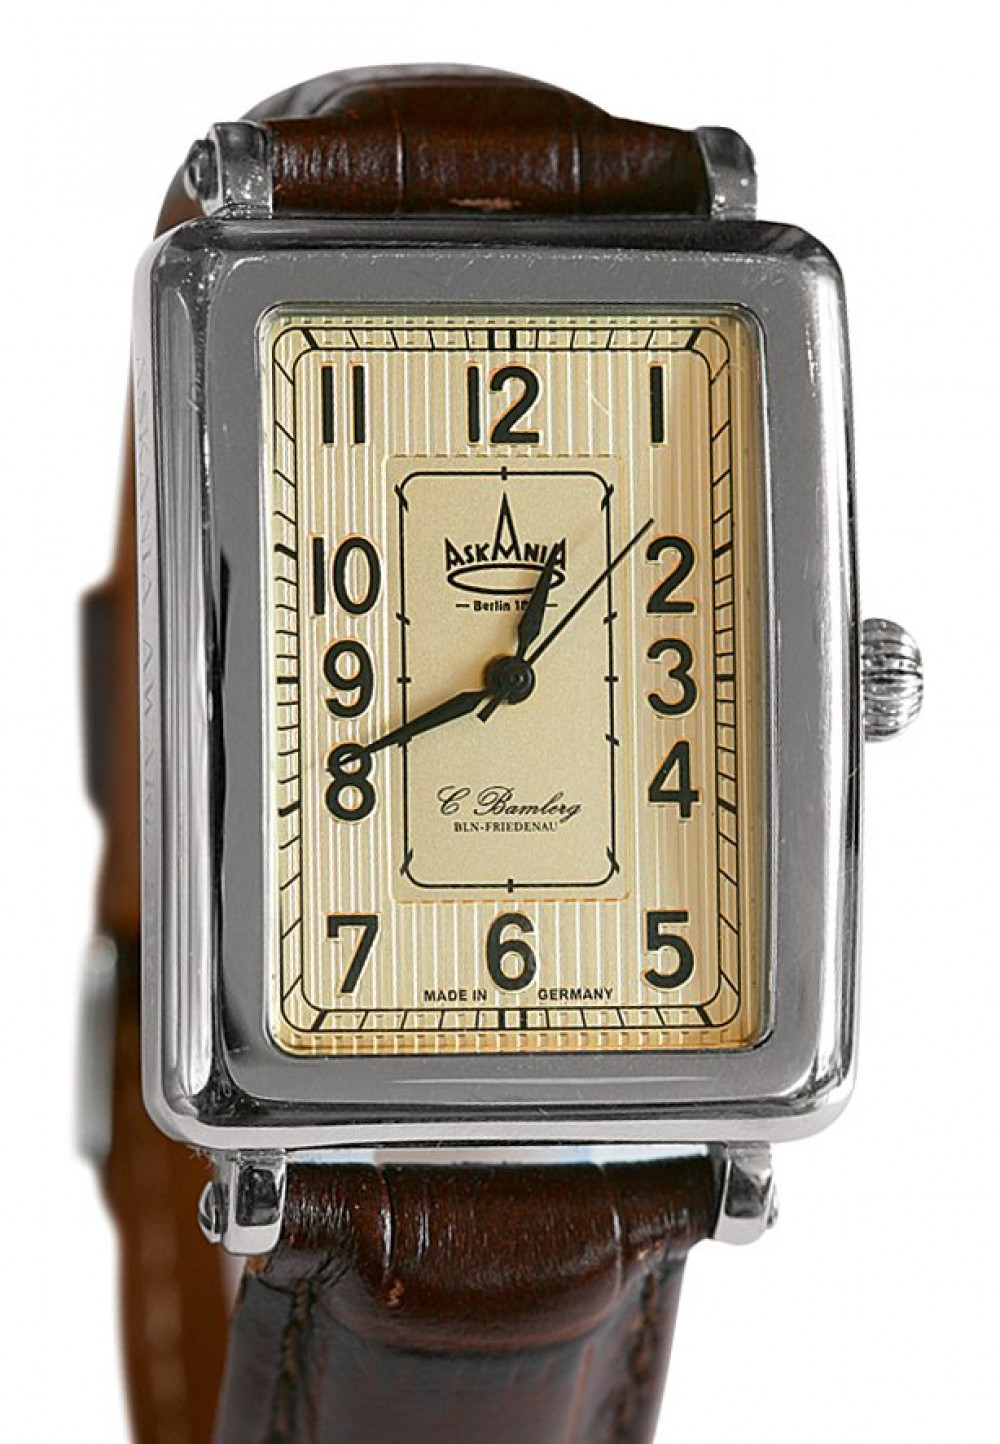 Zegarek firmy Askania, model C. Bamberg